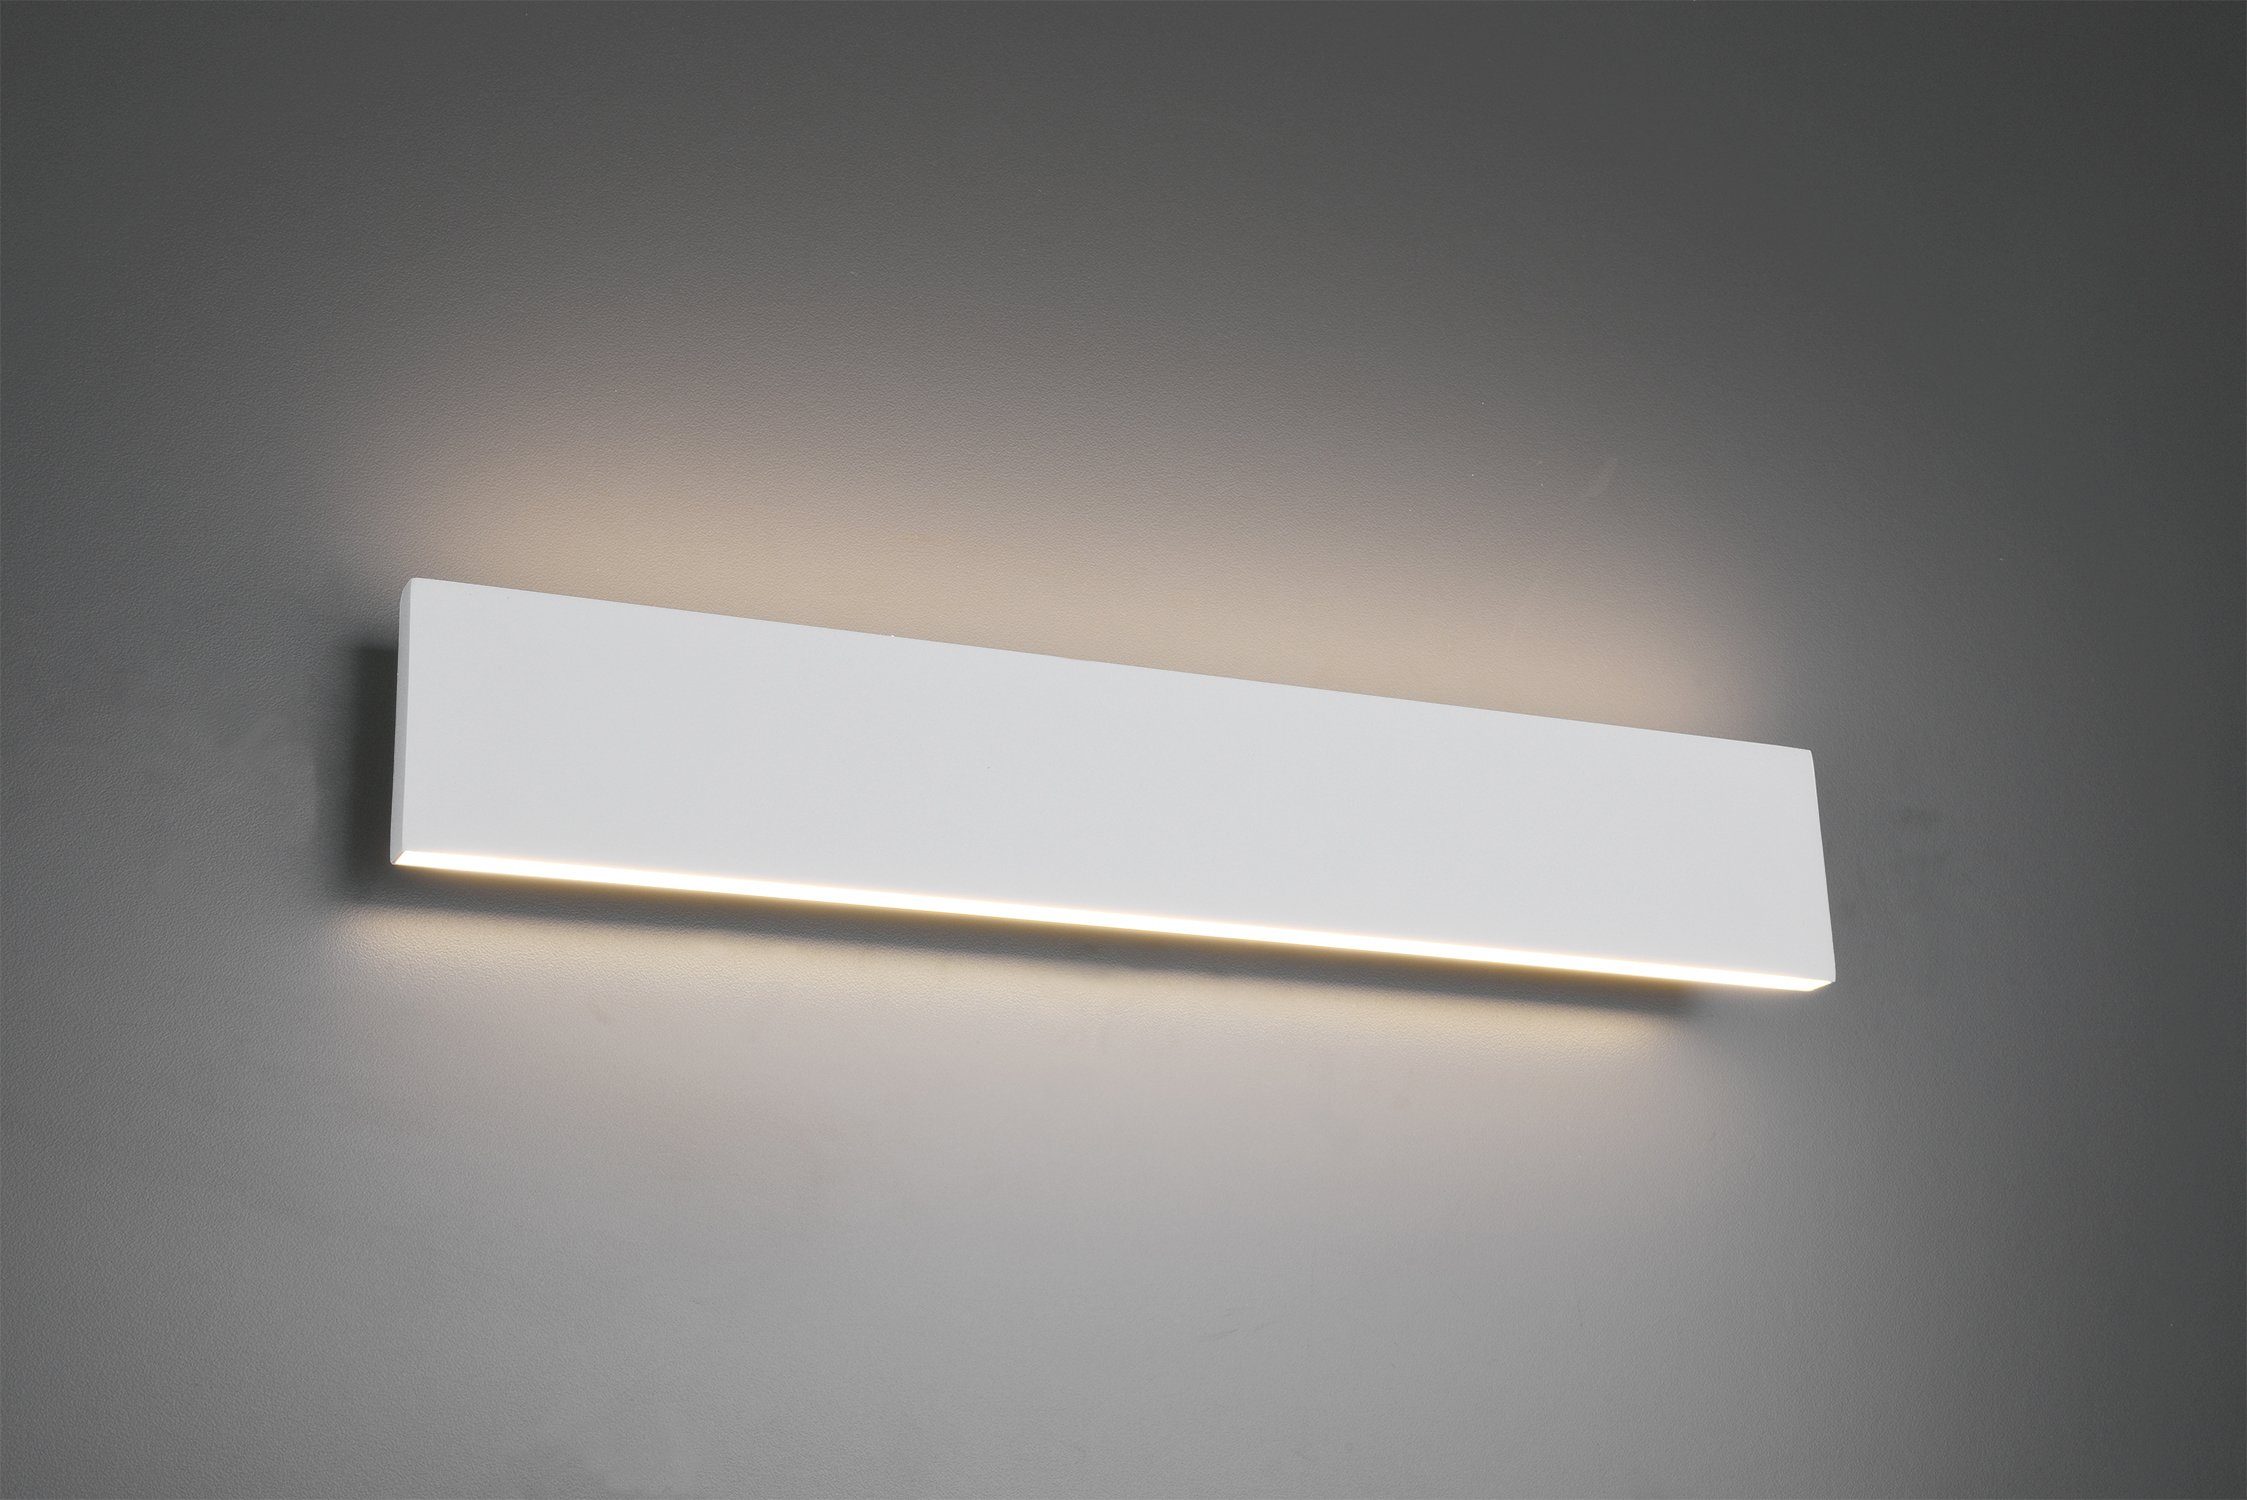 Wandleuchte Warmweiß, integriert, Lumen fest up-and-down-Beleuchtung, Wandschalter, mit über dimmbar Leuchten 1000 2x LED Concha, TRIO LED